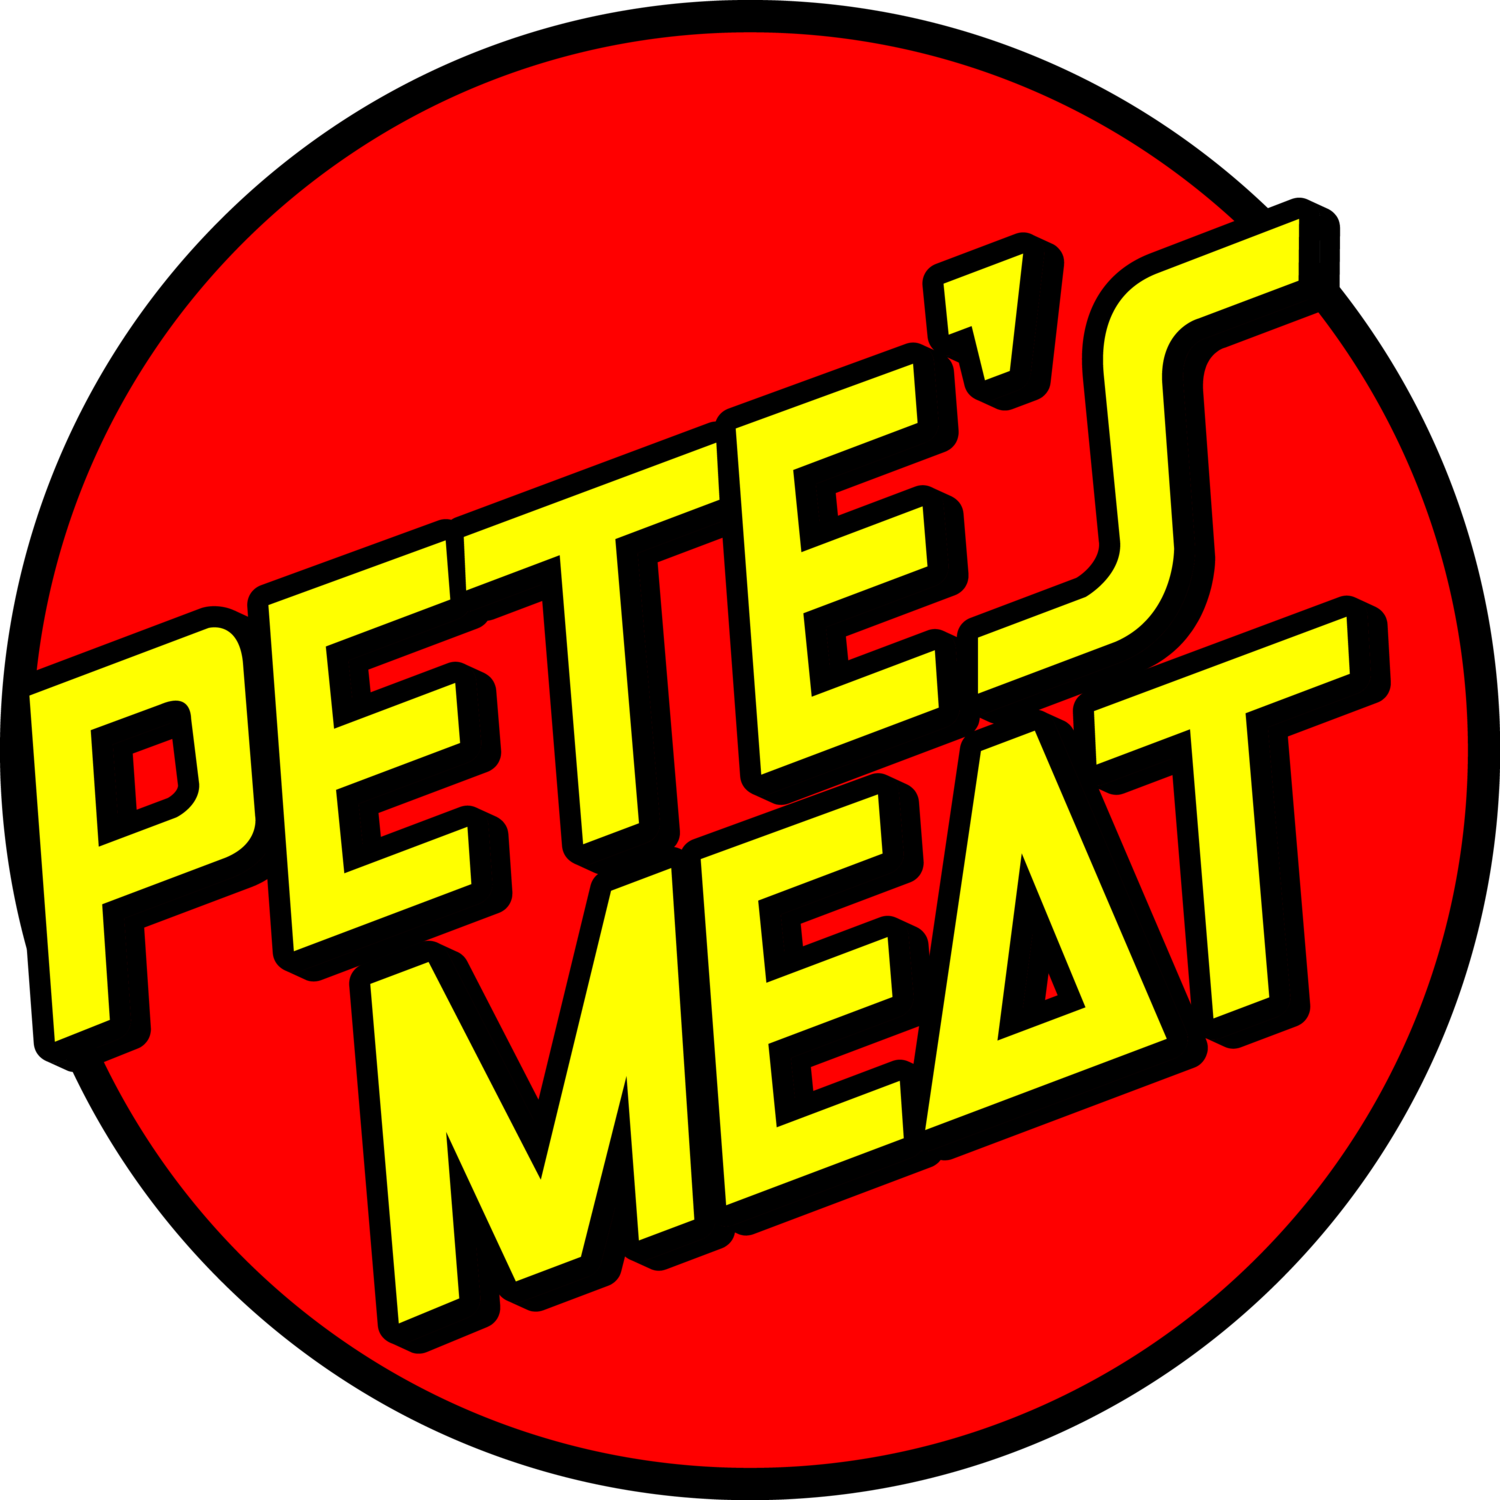 PETE'S MEAT